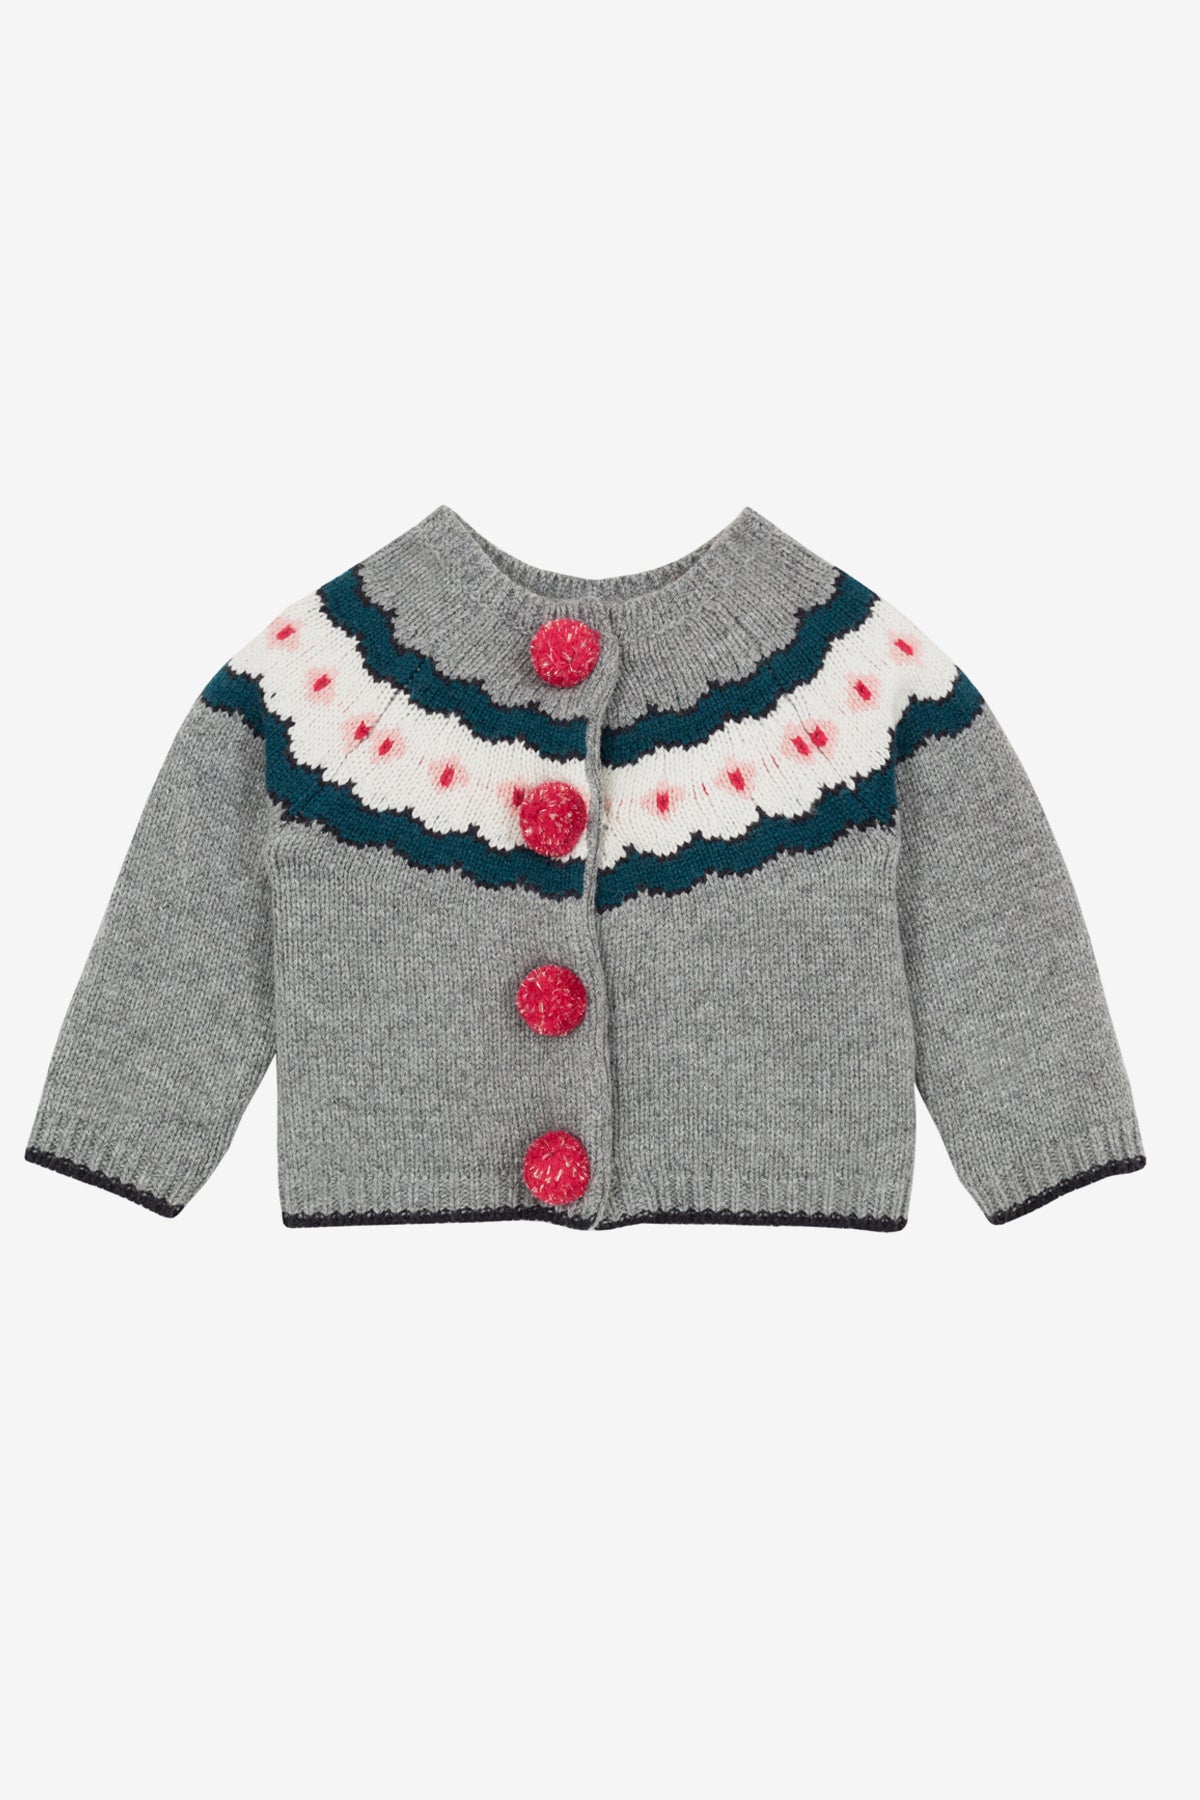 Jean Bourget Baby Knit Sweater – Mini Ruby